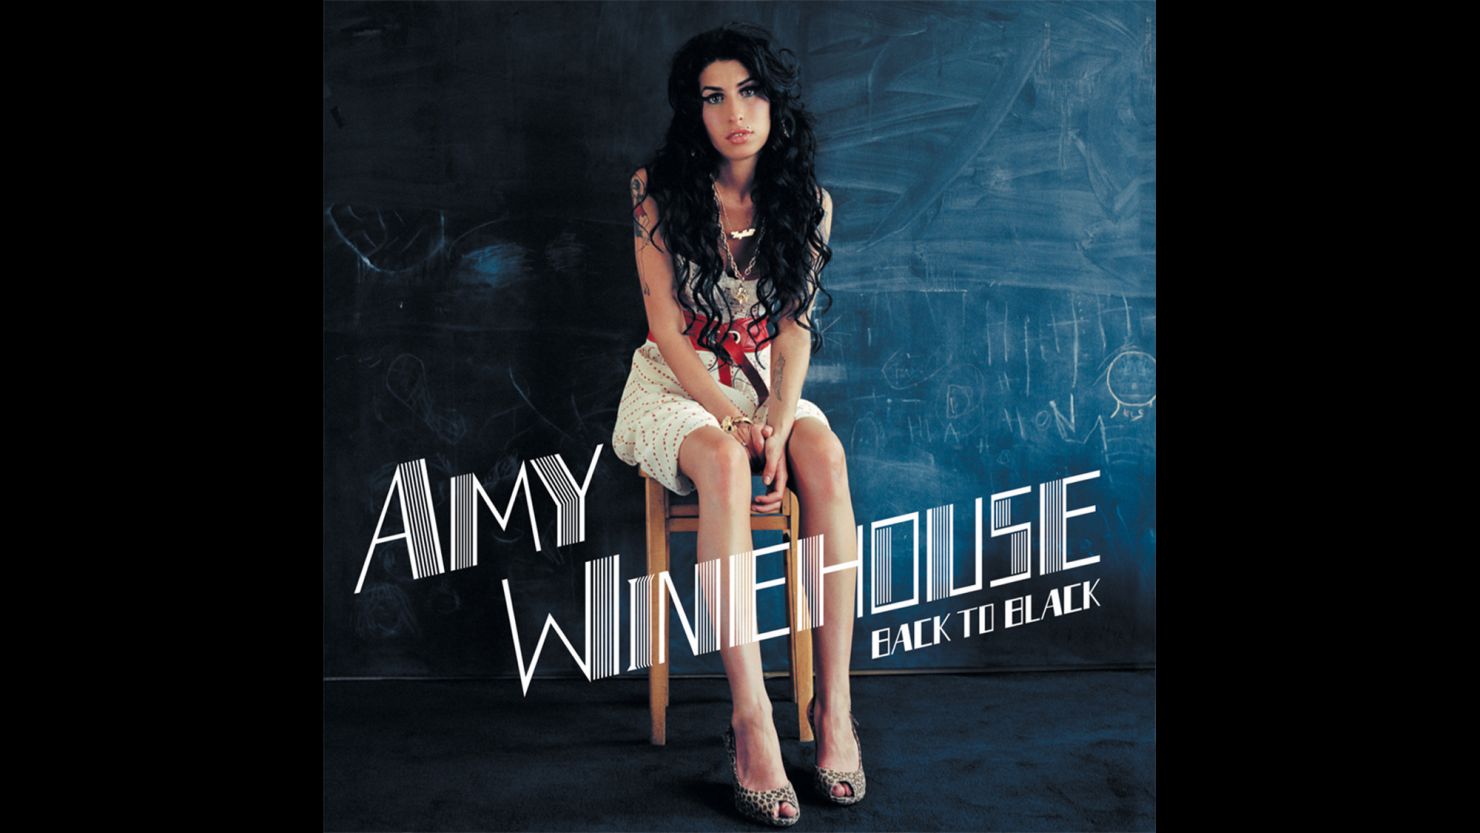  Amy Winehouse: Best Of Amy Winehouse (Clear Vinyl